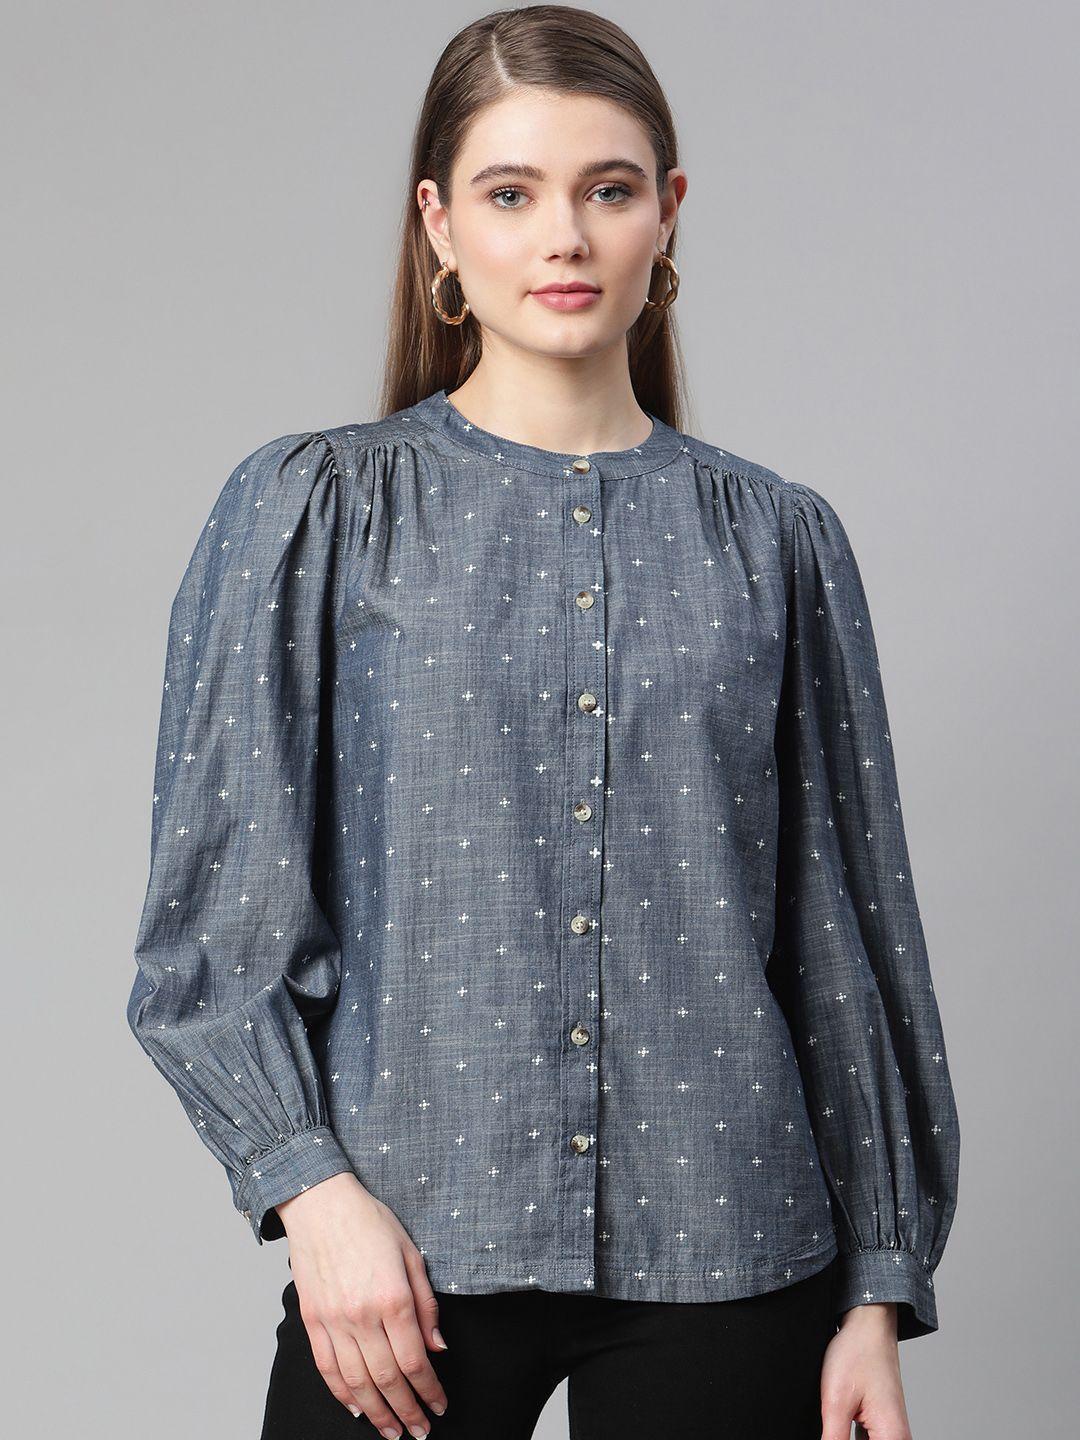 marks & spencer women blue print shirt style top